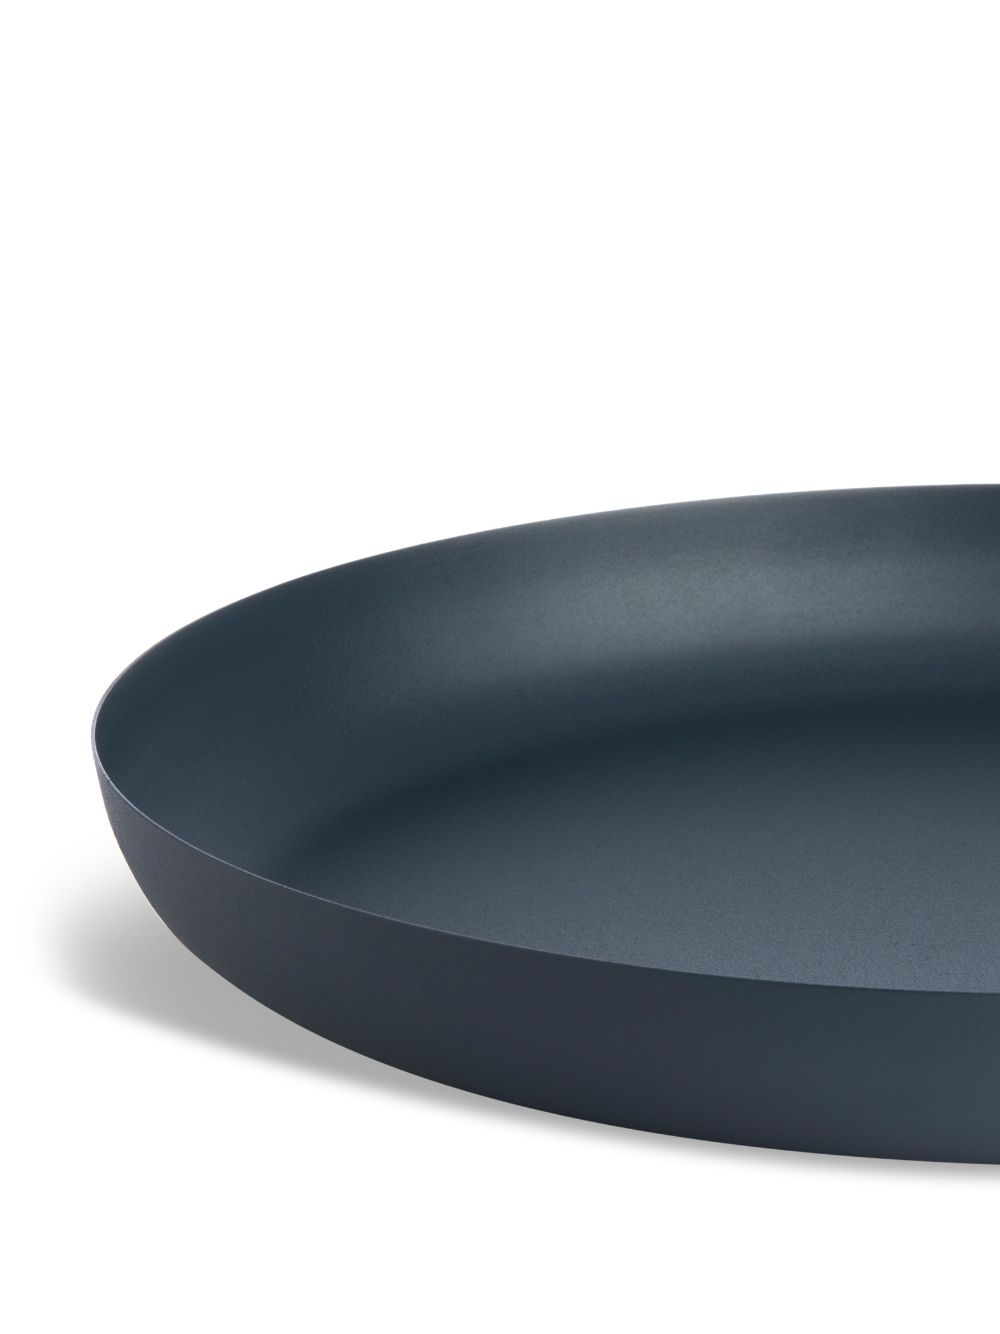 XLBoom Carry Away staintless steel tray (39cm x 4cm) - Blauw